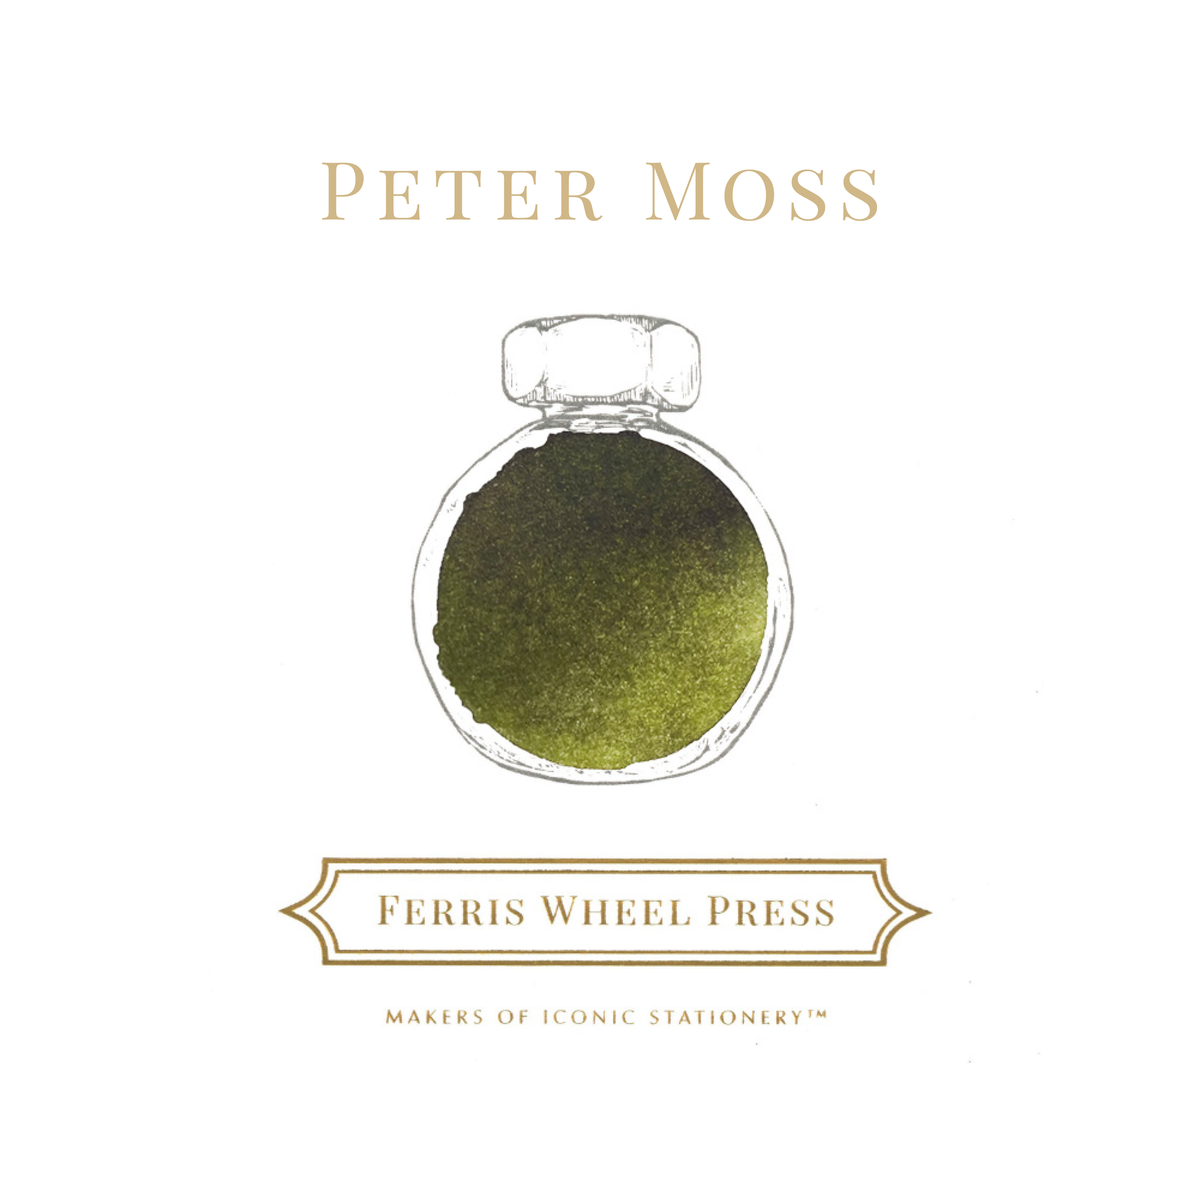 Ferris Wheel Press - 38ml Fountain Pen Ink - Peter Moss